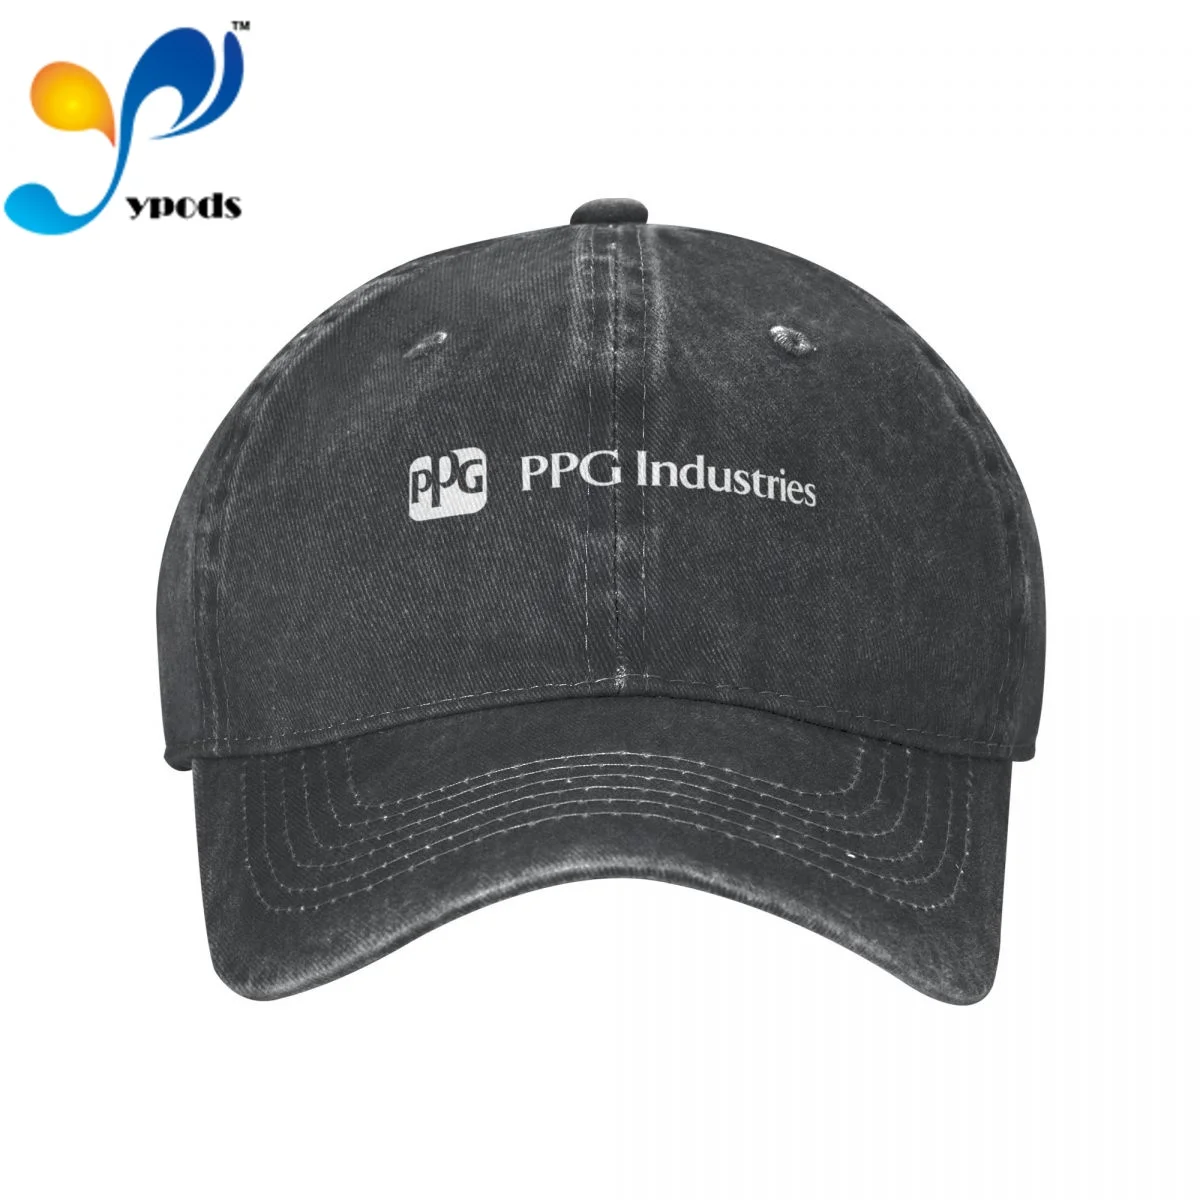 

Ppg Industries Cotton Cap For Men Women Gorras Snapback Caps Baseball Caps Casquette Dad Hat